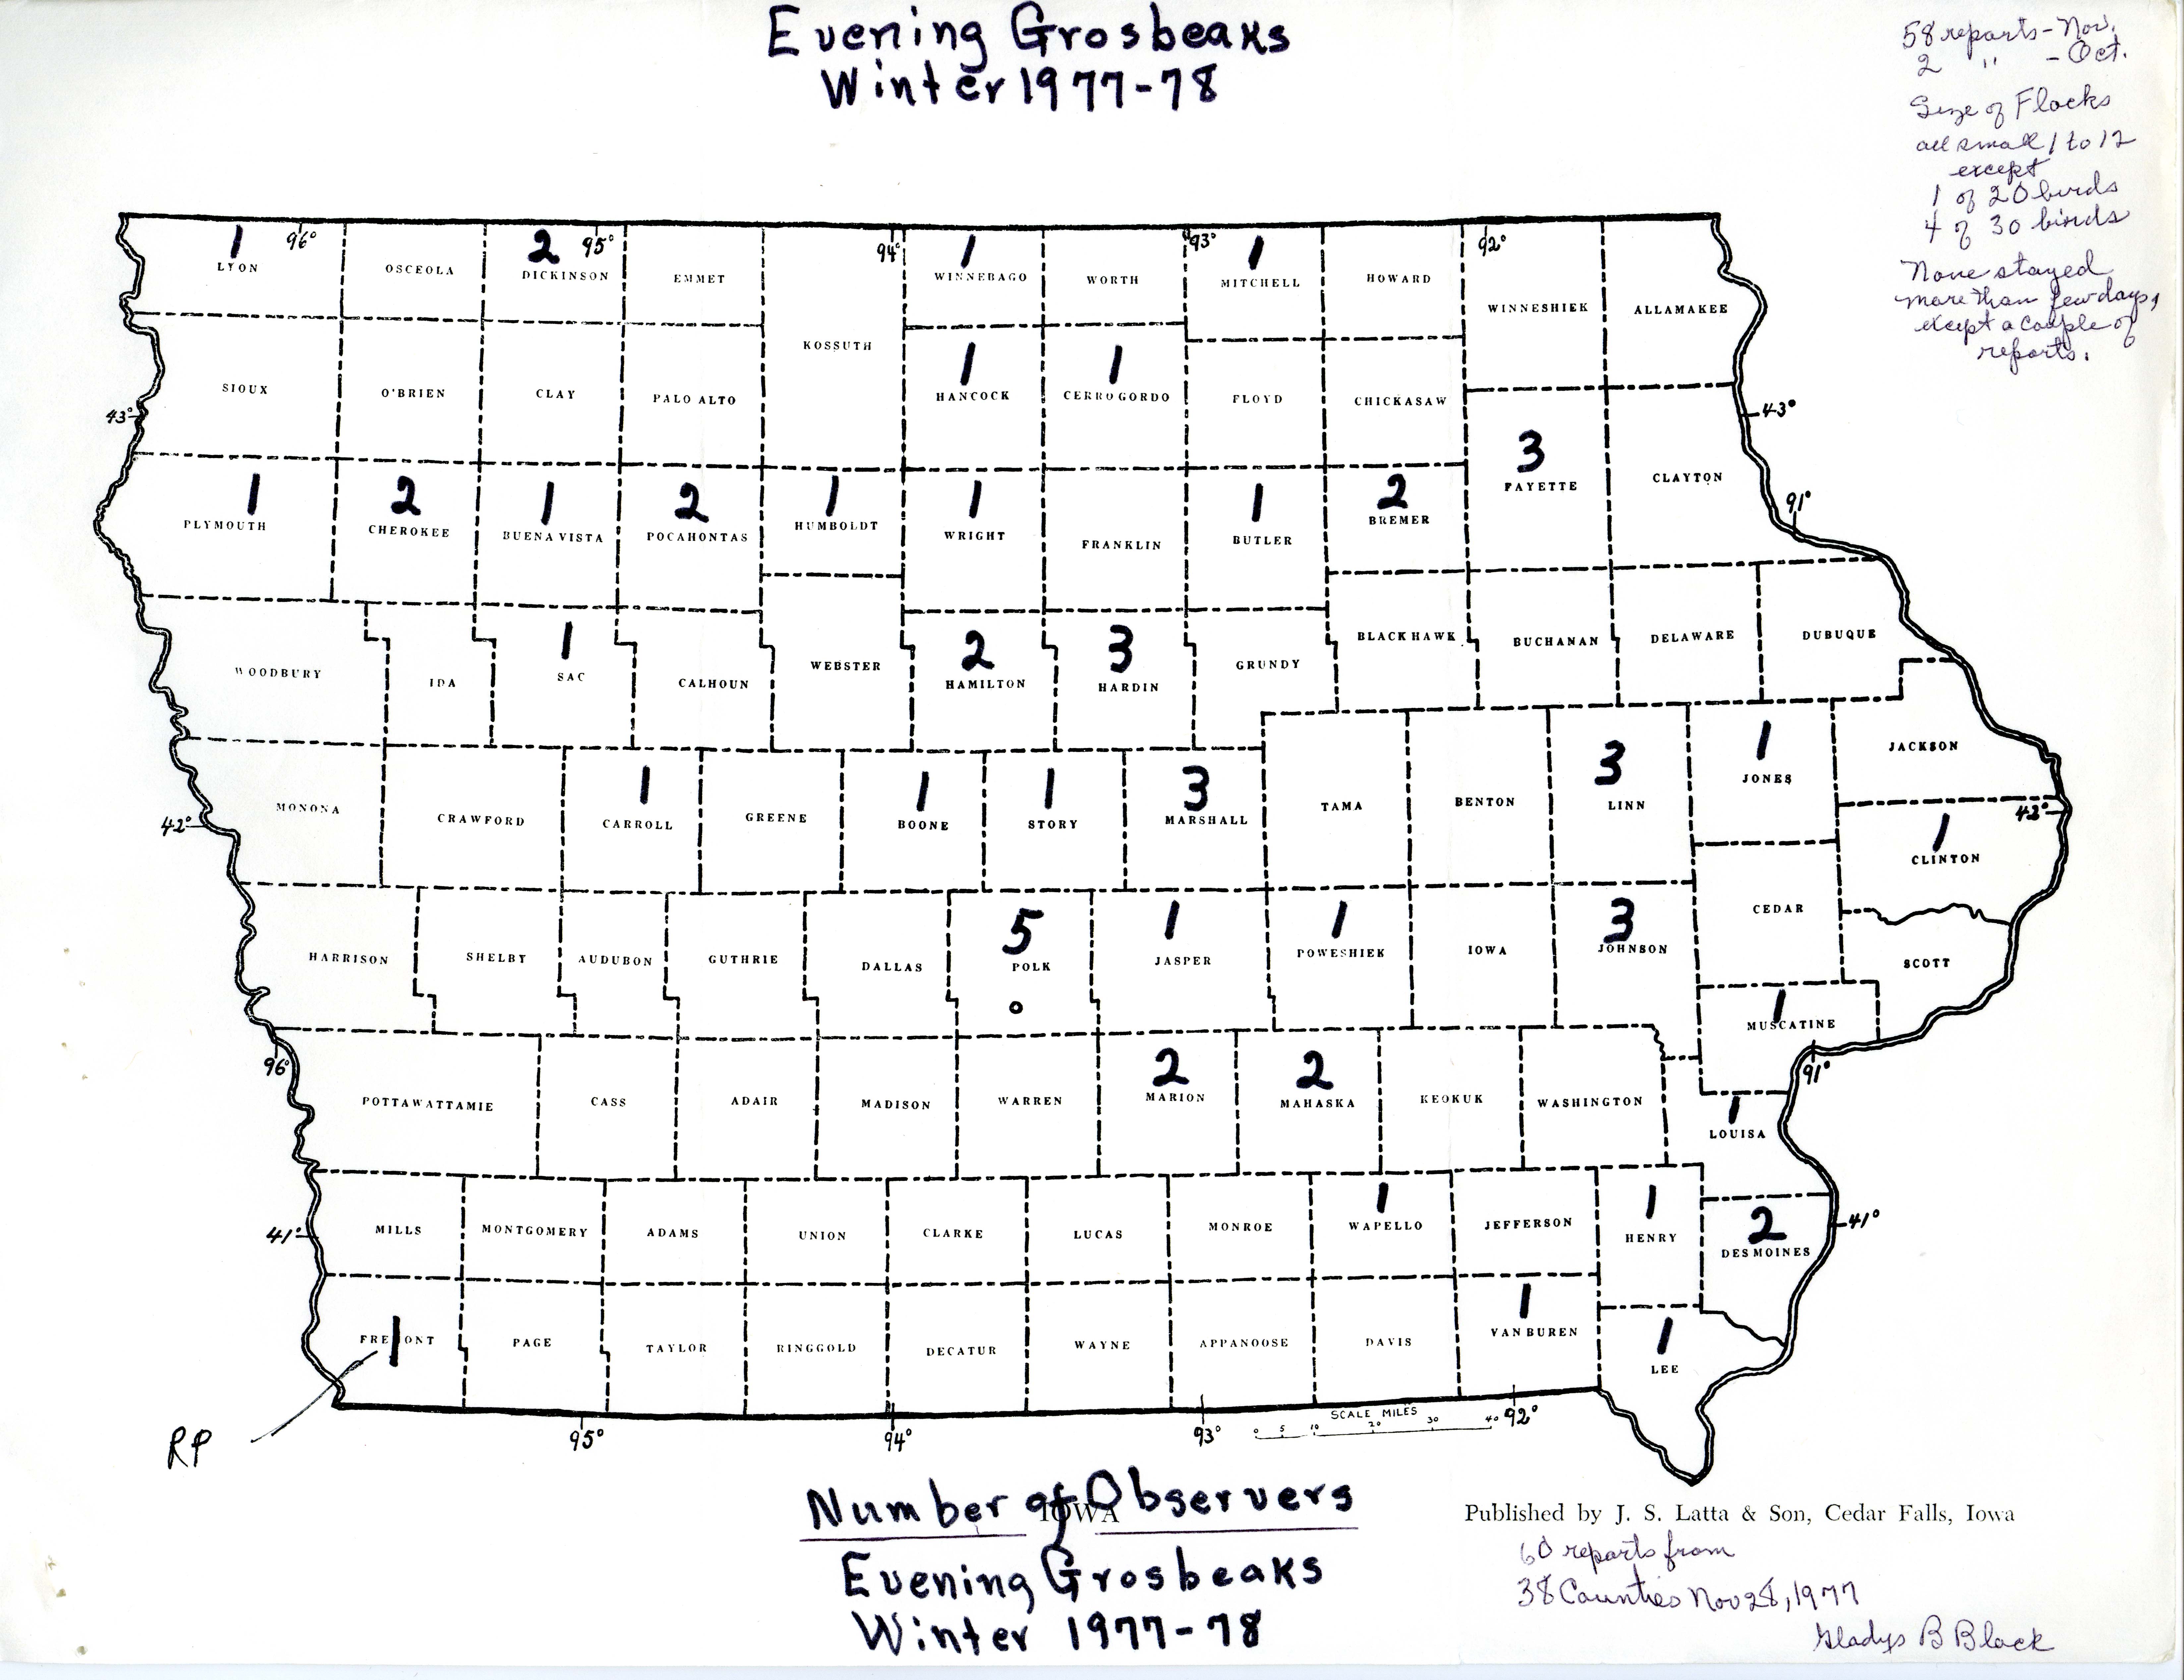 Iowa map with Evening Grosbeak sightings, winter 1977-1978